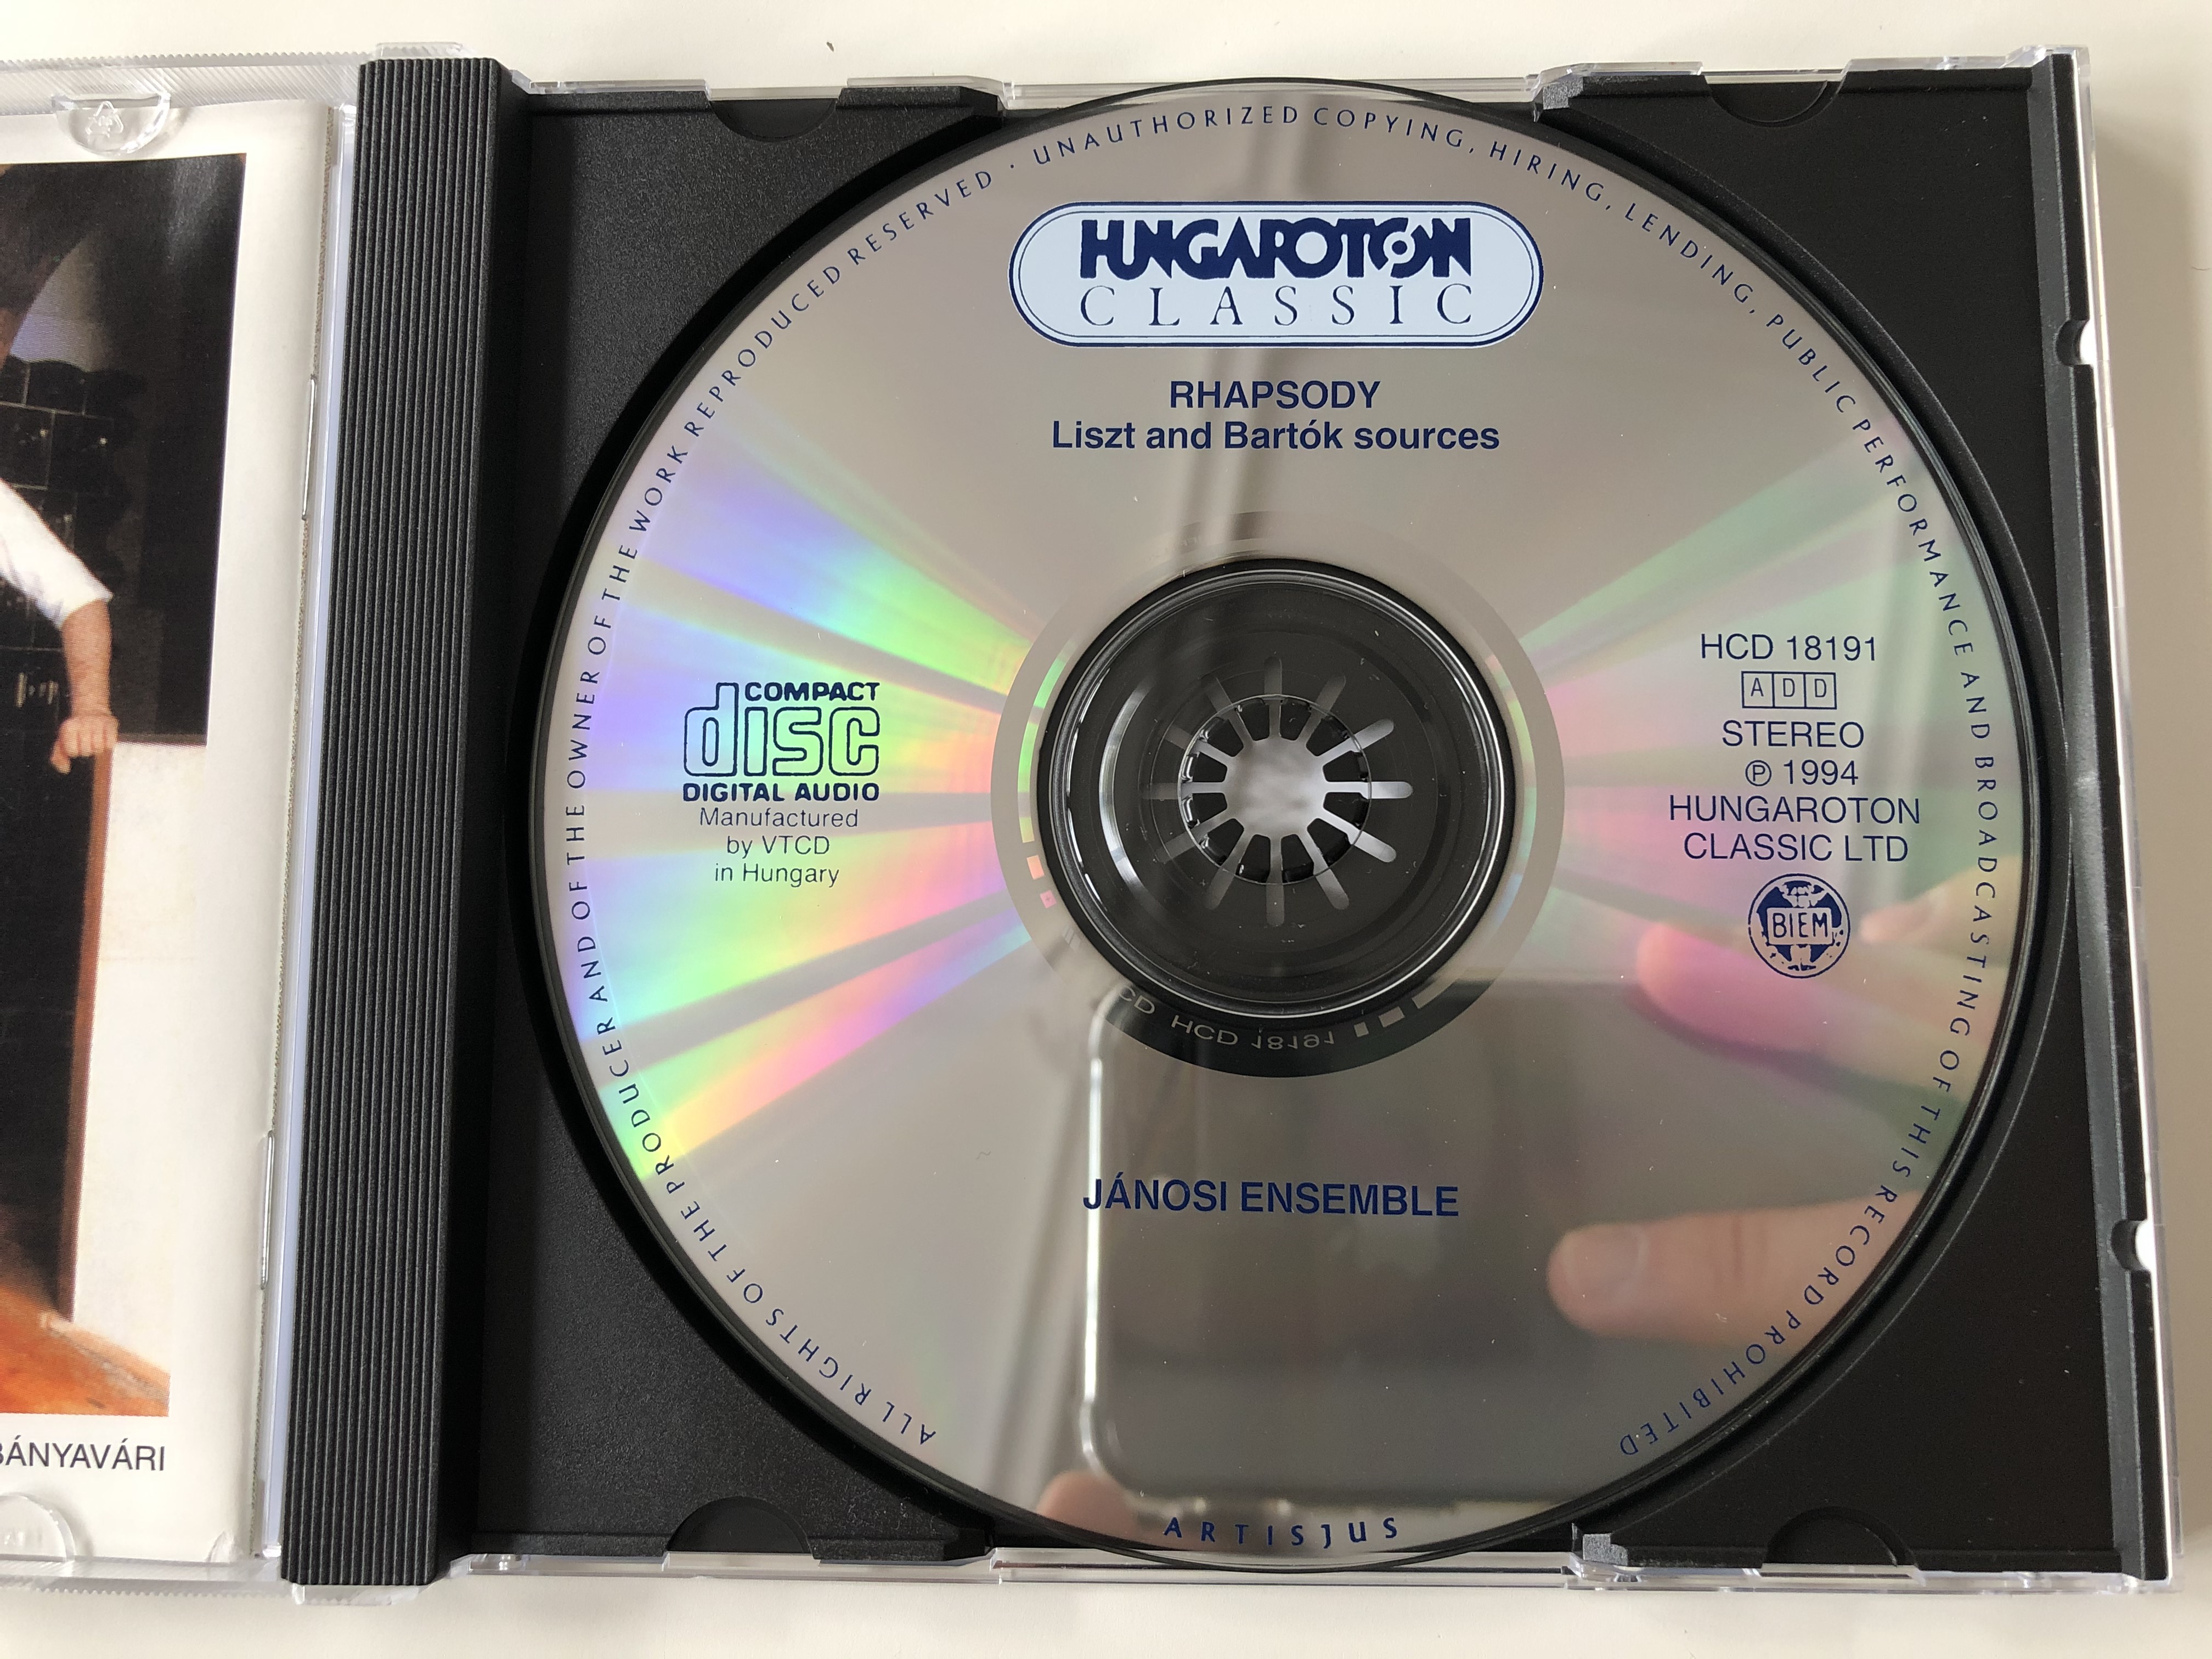 j-nosi-ensemble-rhapsody-liszt-bart-k-sources-hungaroton-classic-audio-cd-1994-stereo-hcd-18191-16-.jpg